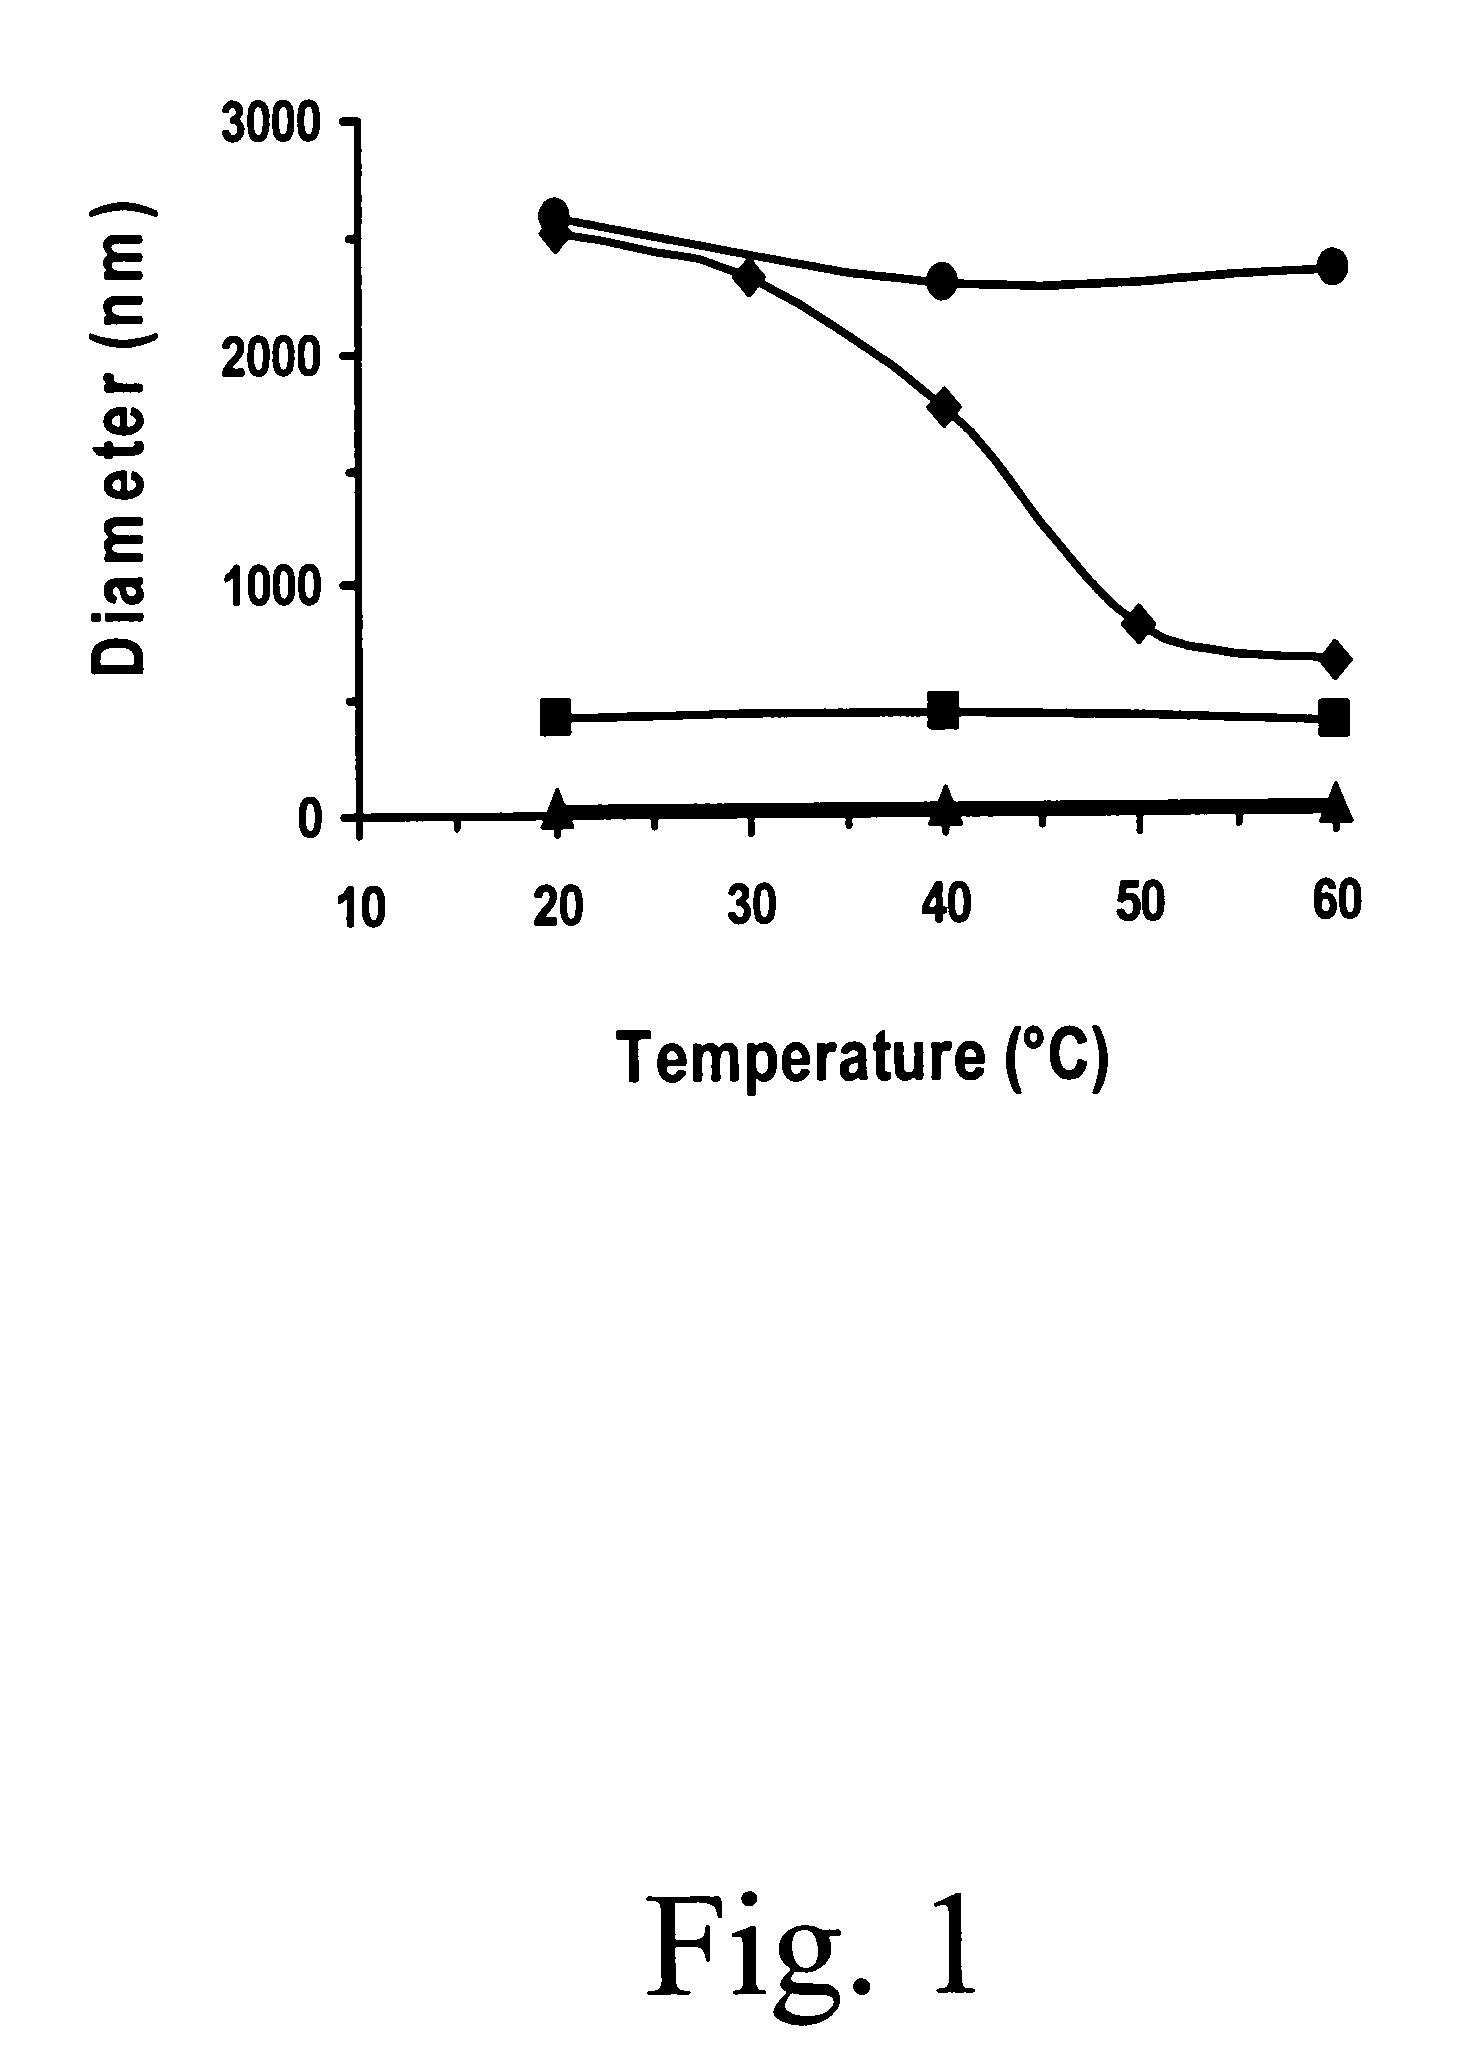 Temperature sensitive control of liposome-cell adhesion